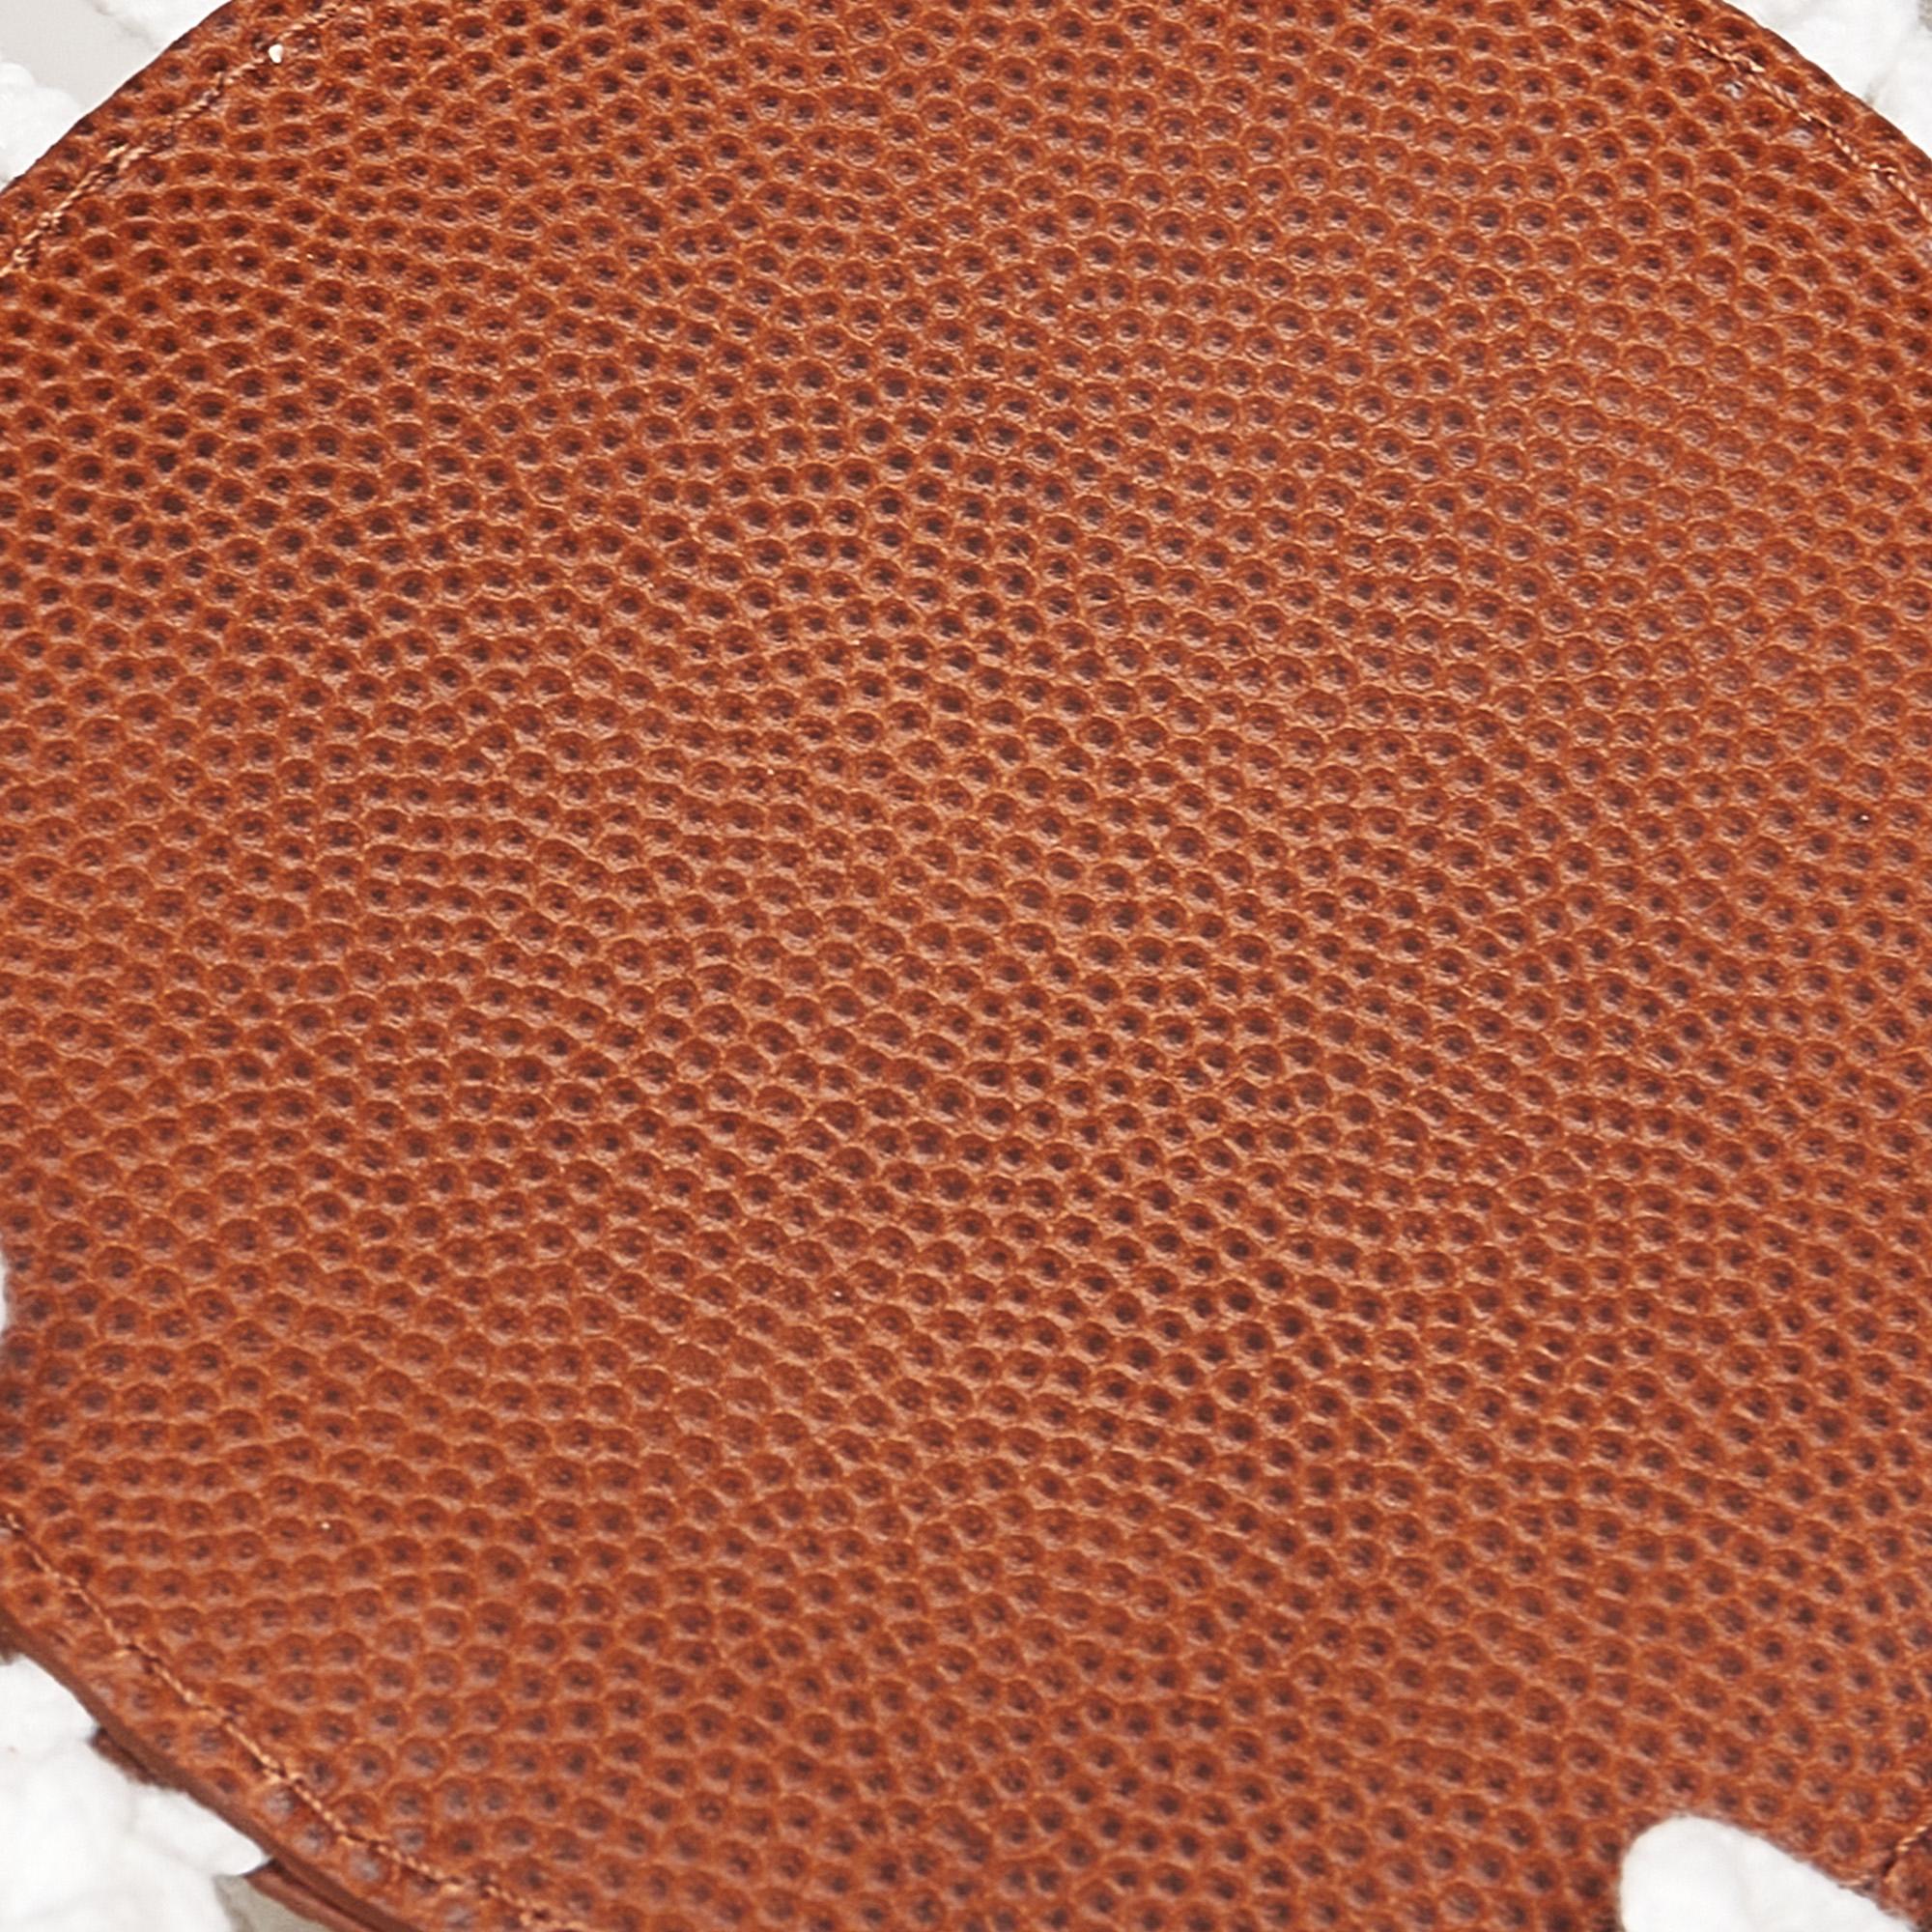 Louis Vuitton Brown LV X NBA Ball In Basket Bag